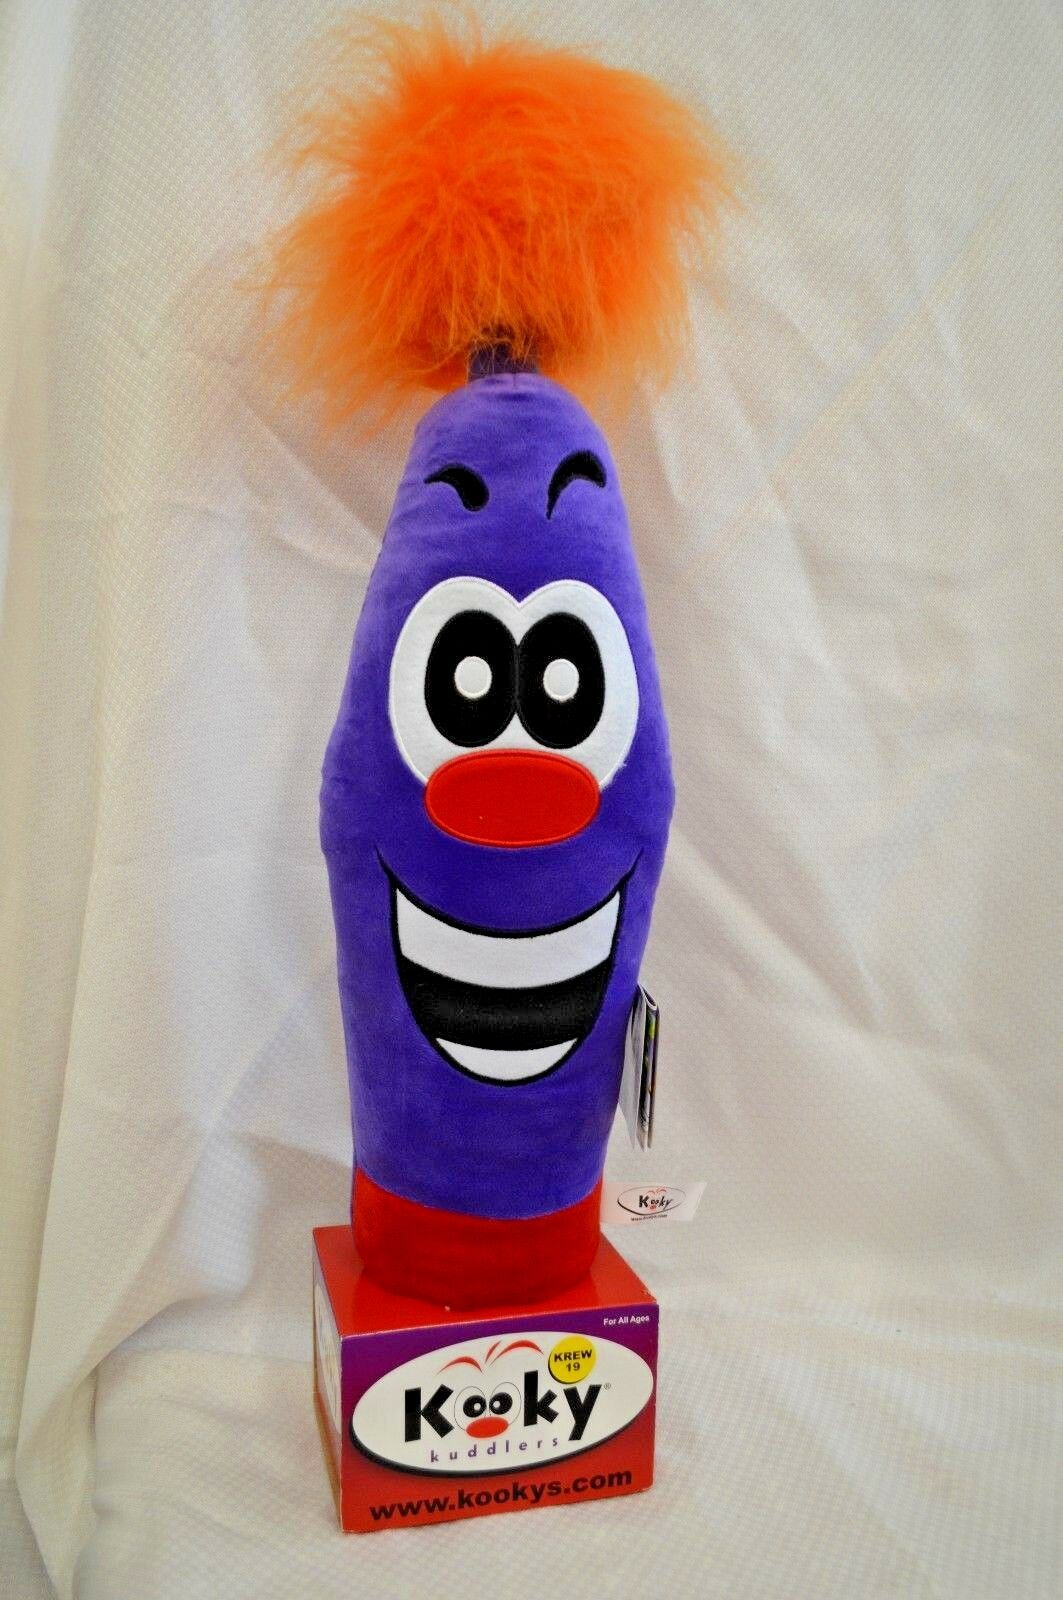 Kooky Kuddler Kooky's Large Bean Bag Toy Collect Plato 149 Krew 19 Nw 24" Purple